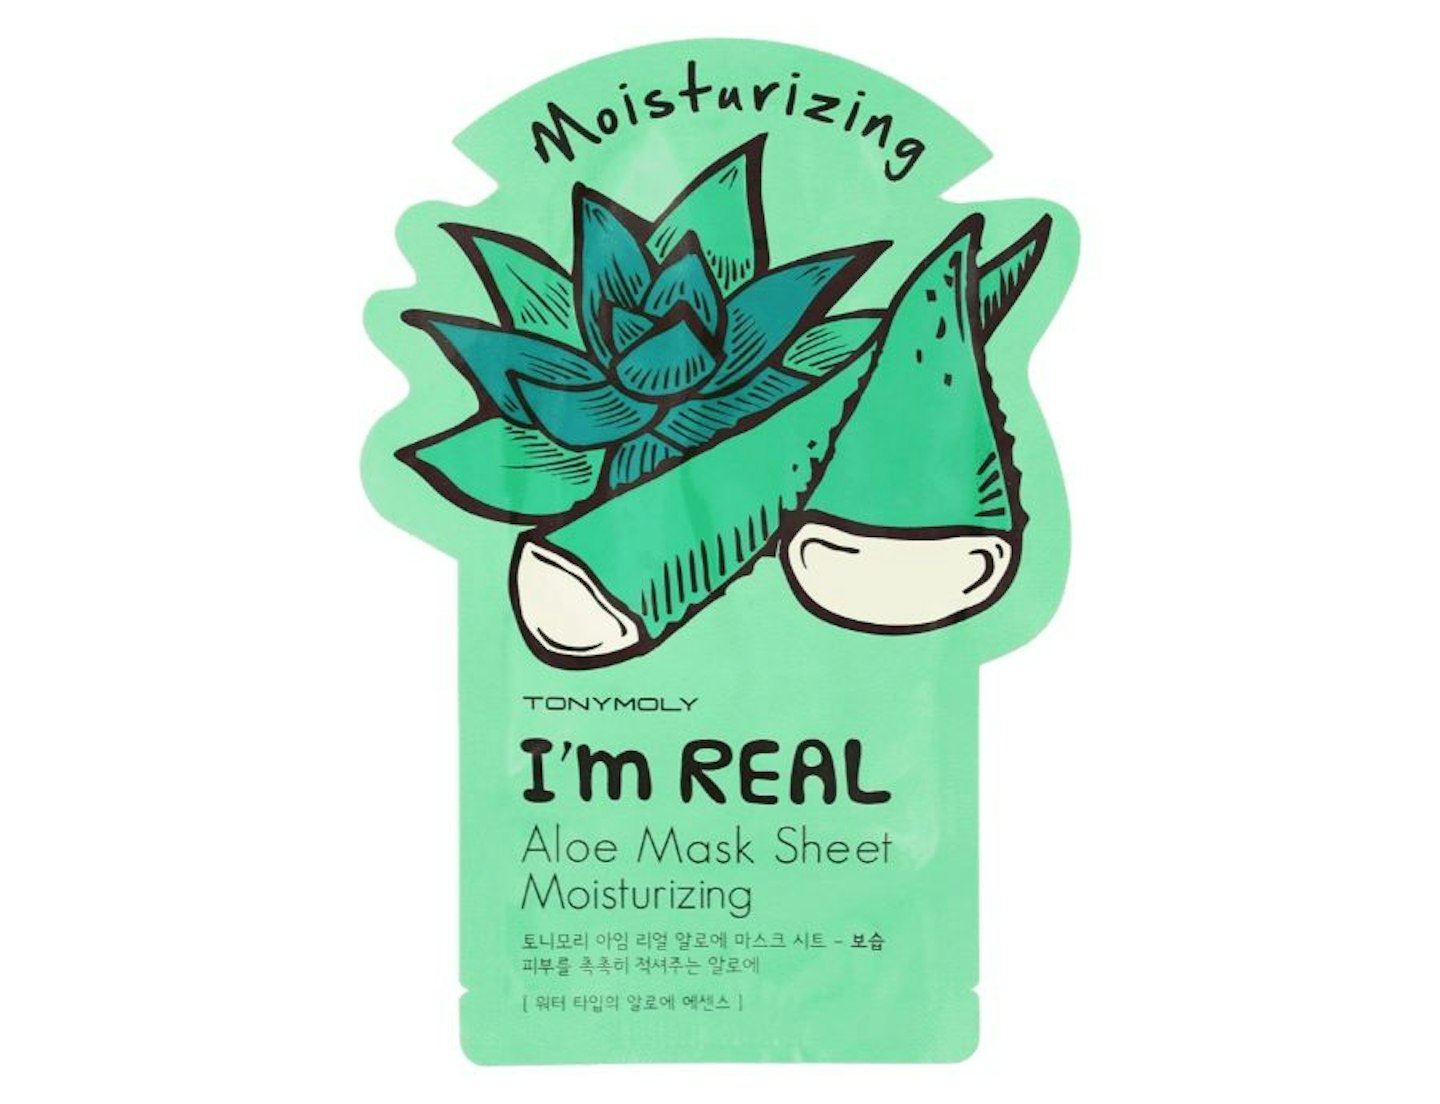 Tonymoly I'm Aloe Sheet Mask, £5.00, boots.com